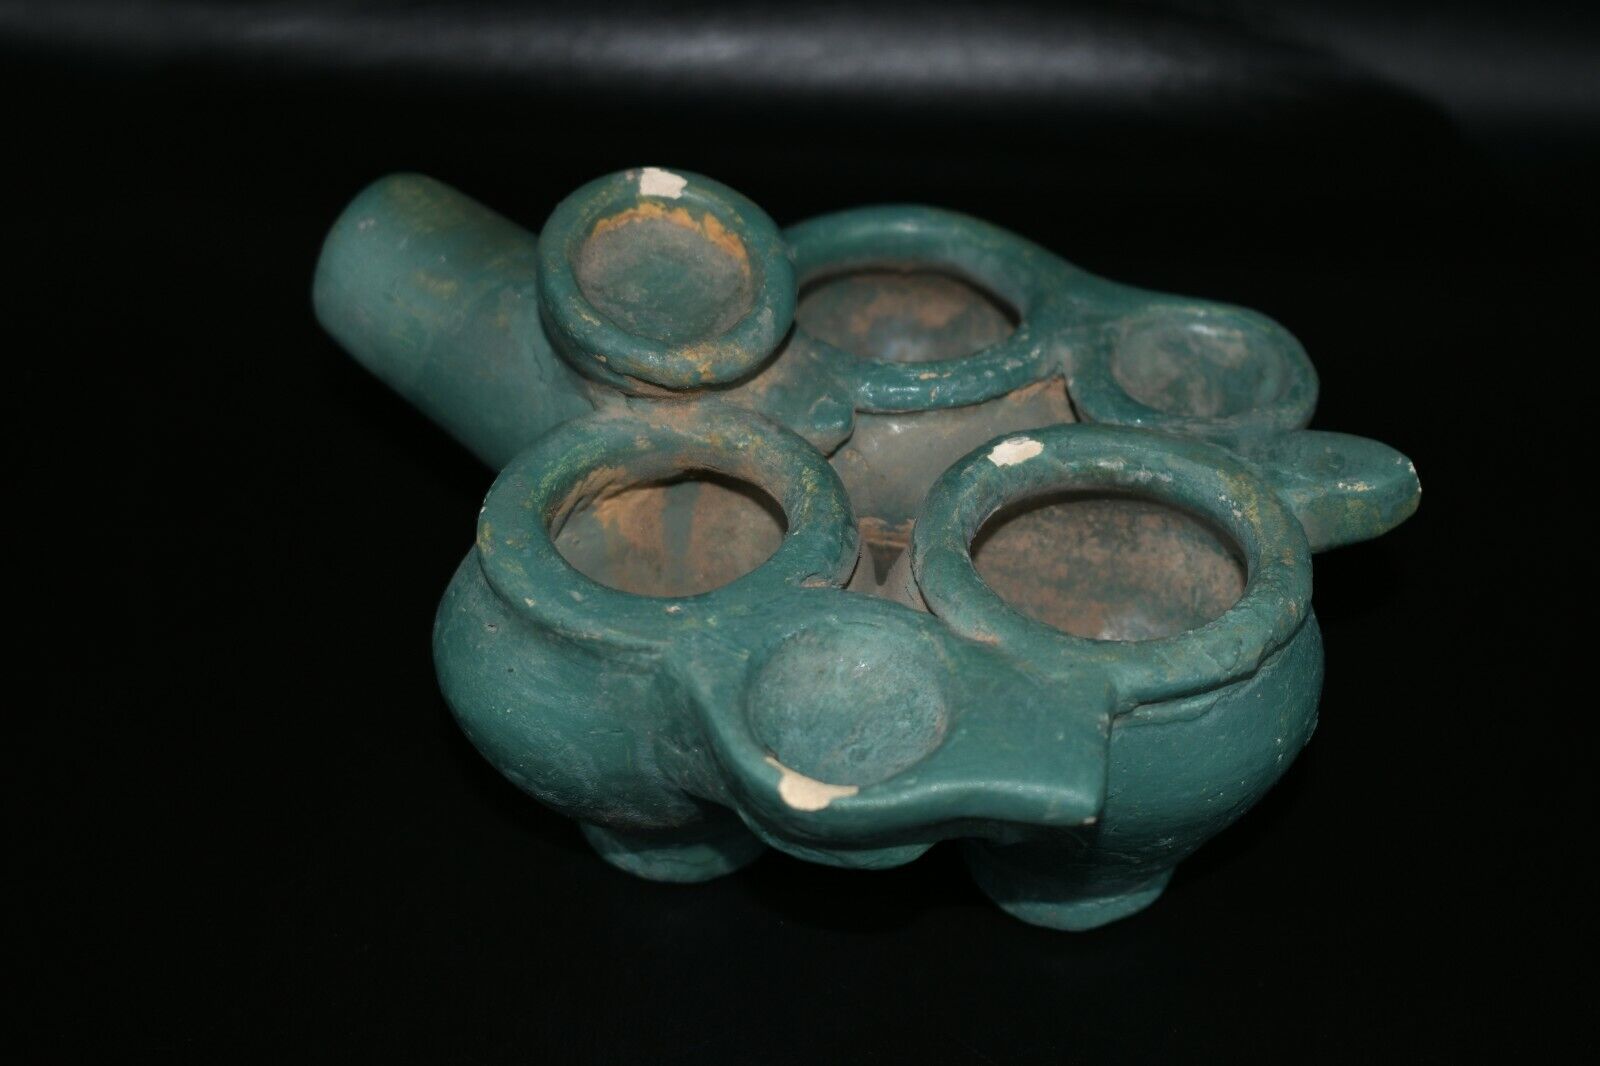 Authentic Large Ancient Islamic Turquoise Glazed Ceramic Lamp C. 13th - 14th AD